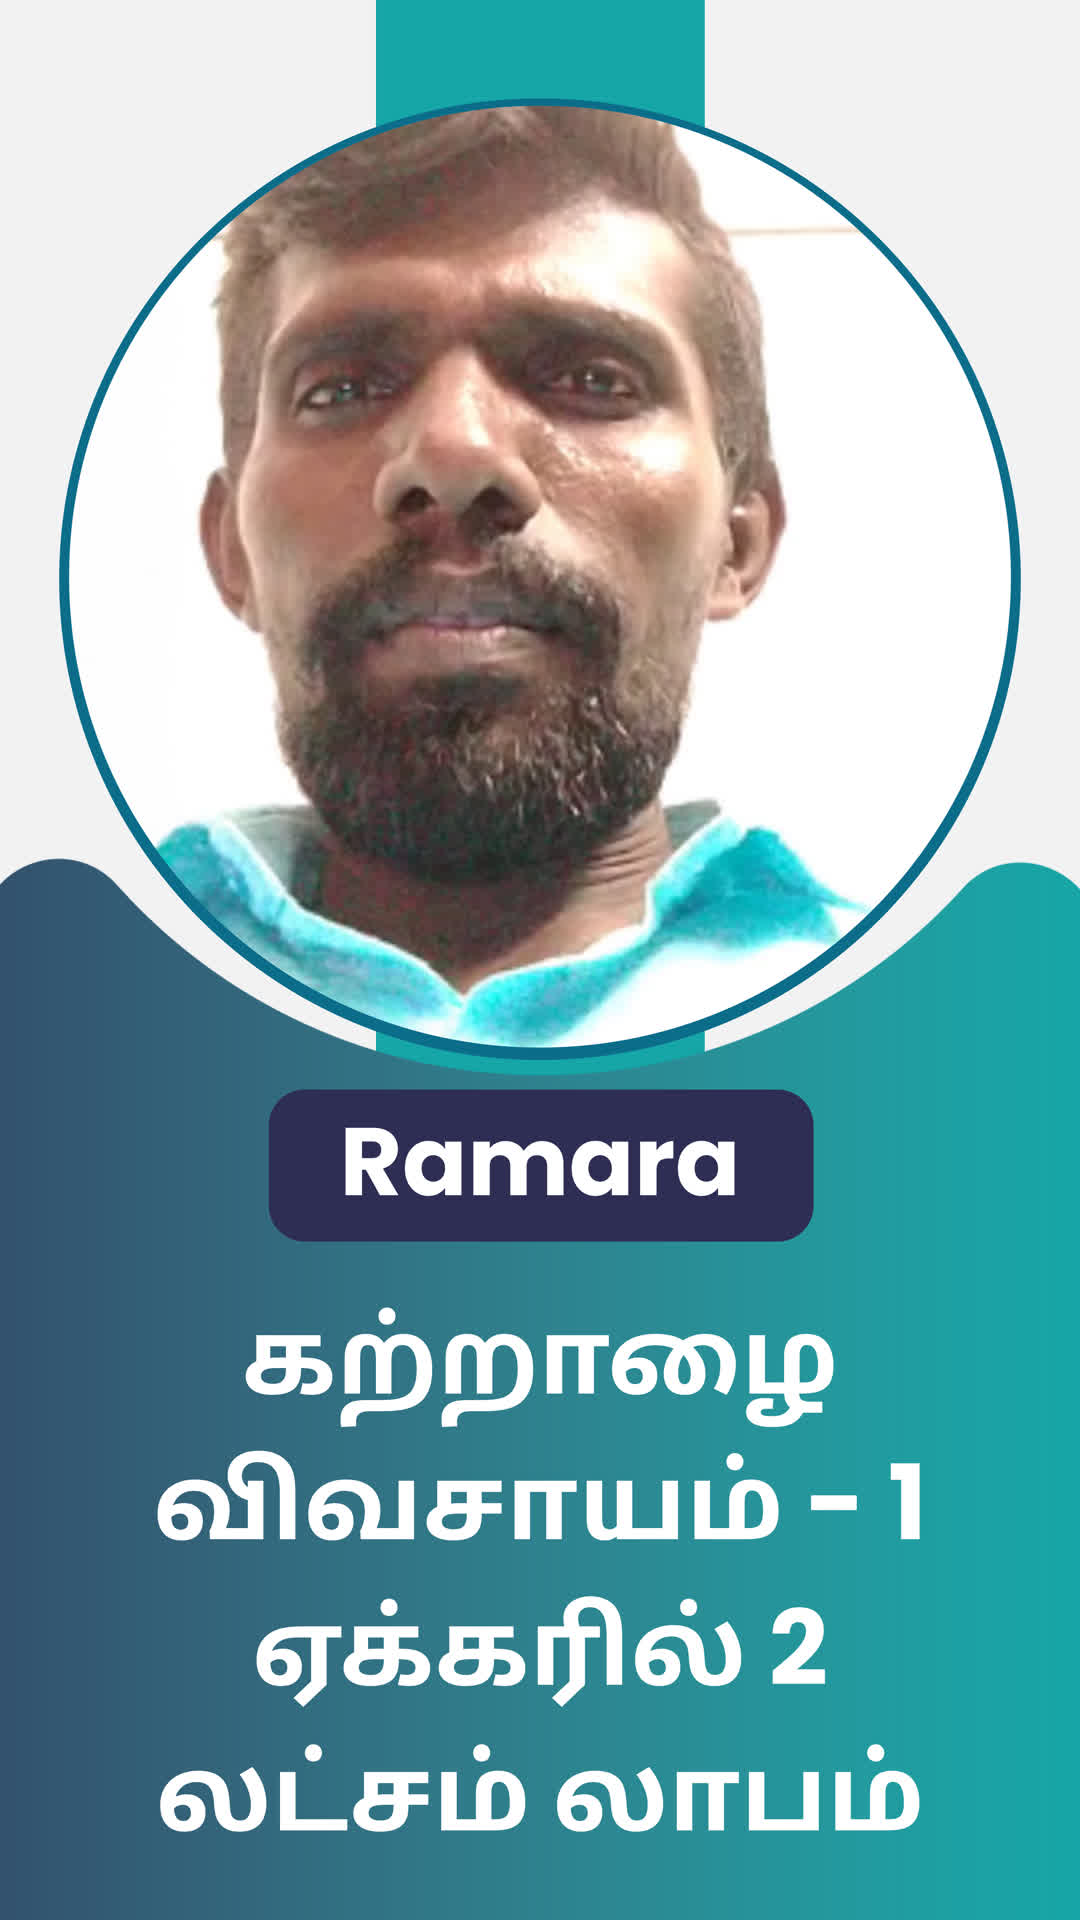 Ramar .A's Honest Review of ffreedom app  Tamil Nadu